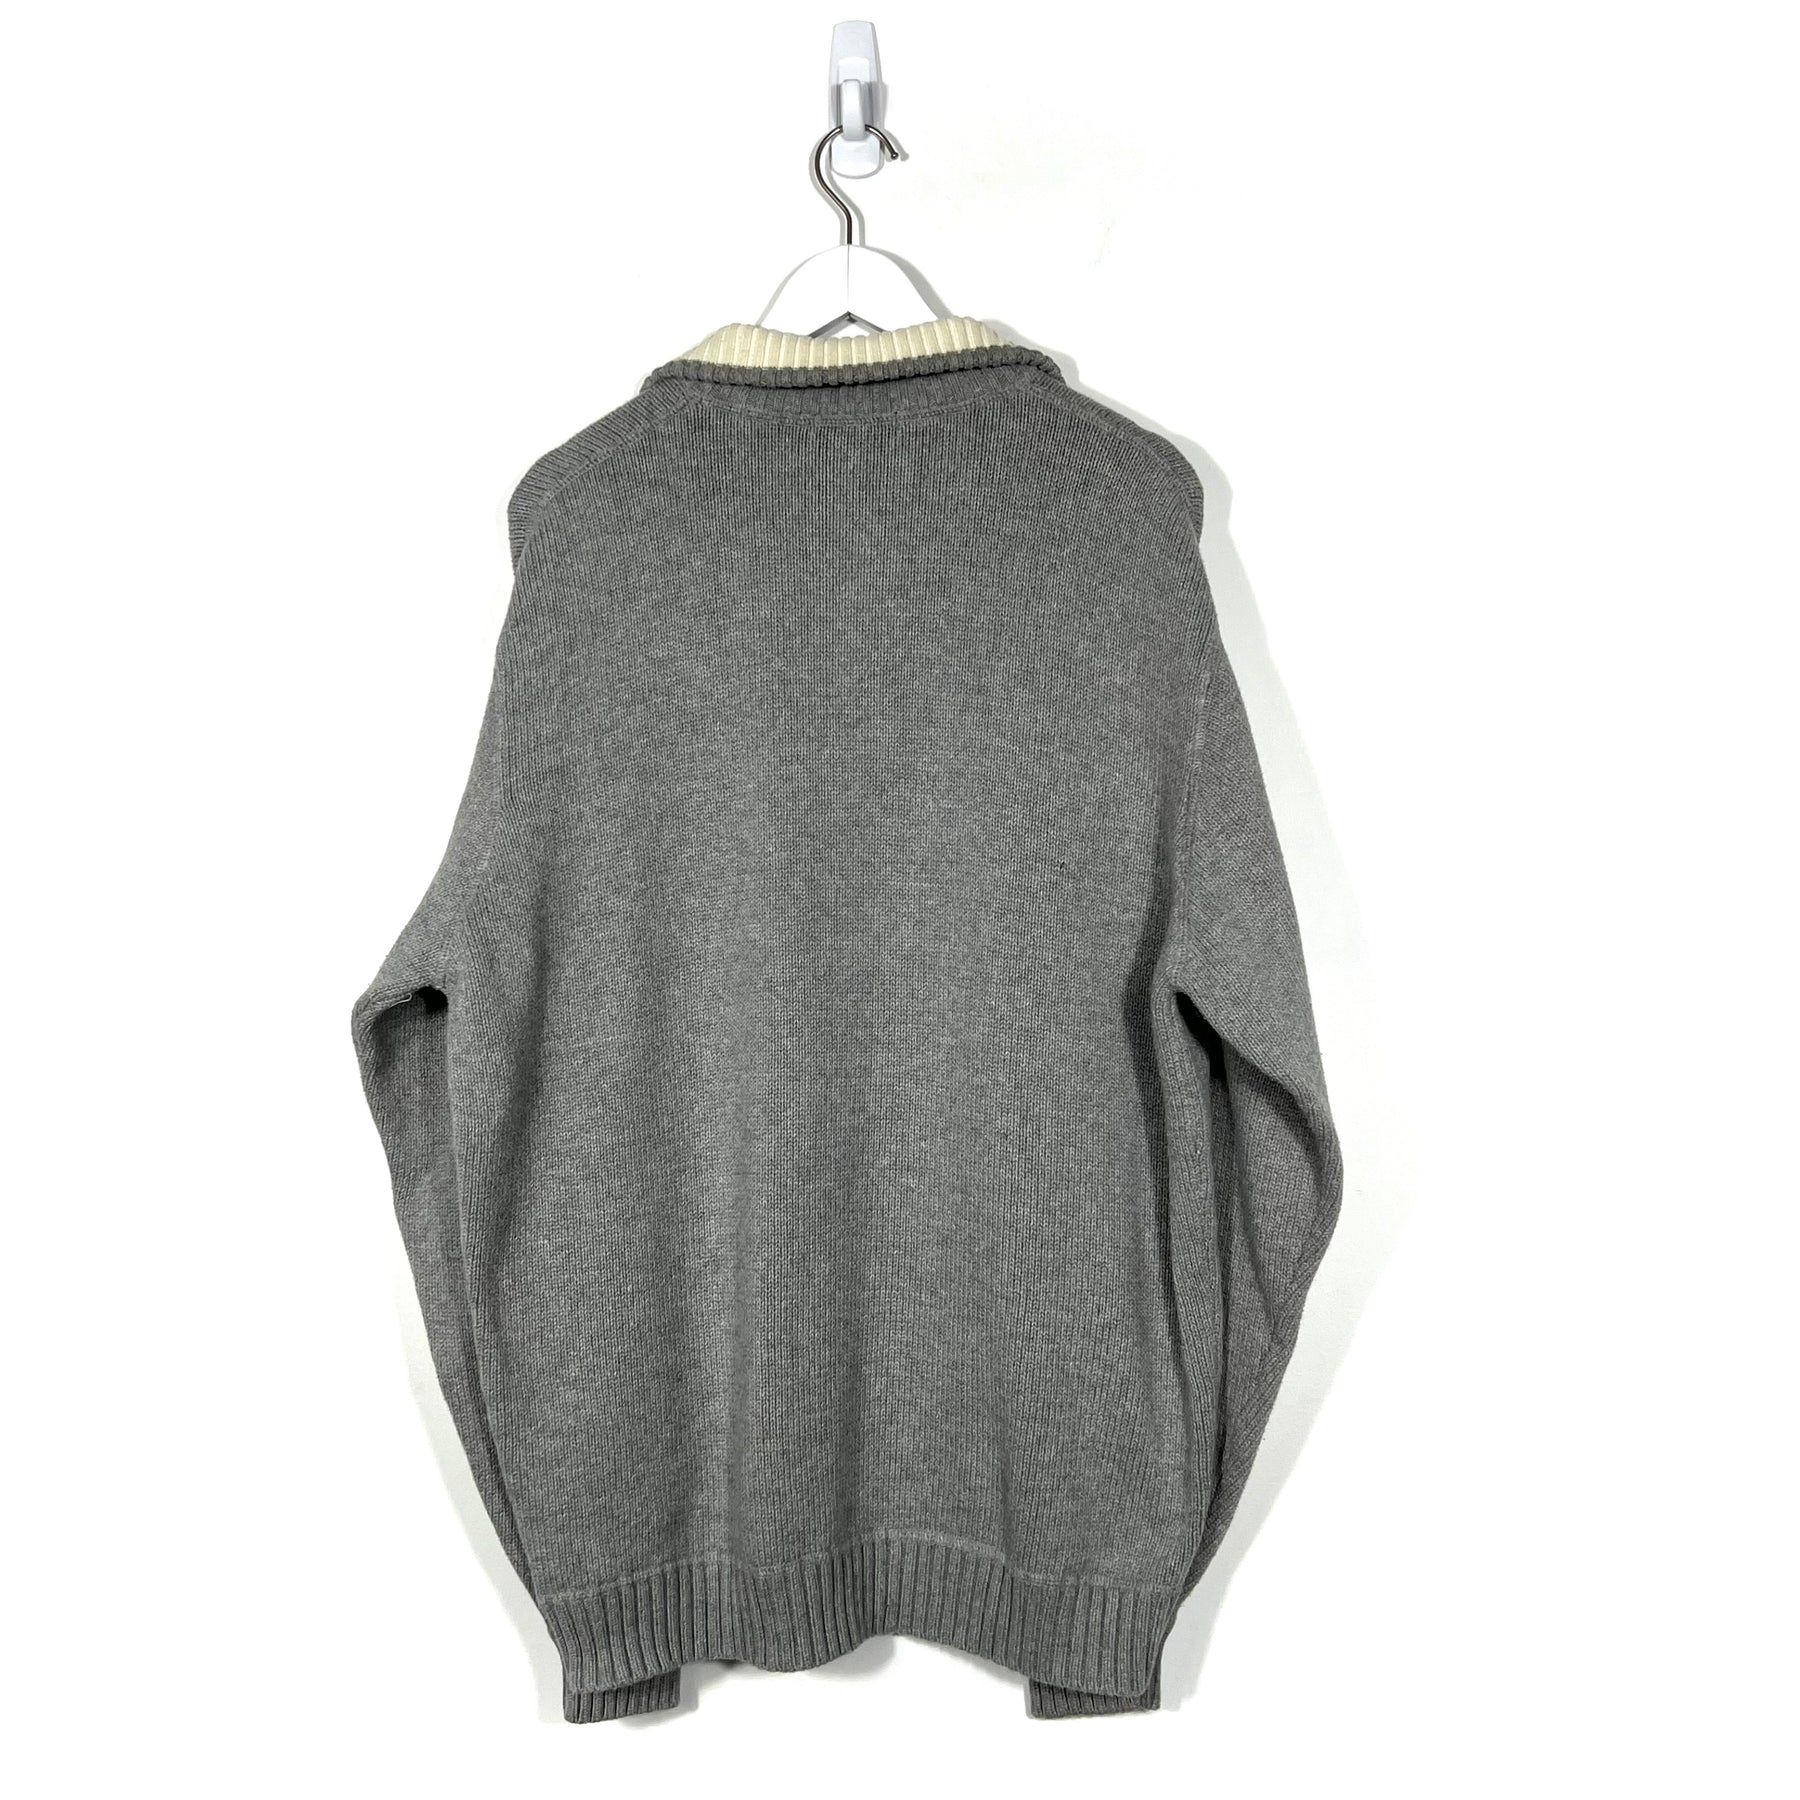 Nautica 1/4 Zip Knitted Sweater - Men's XL